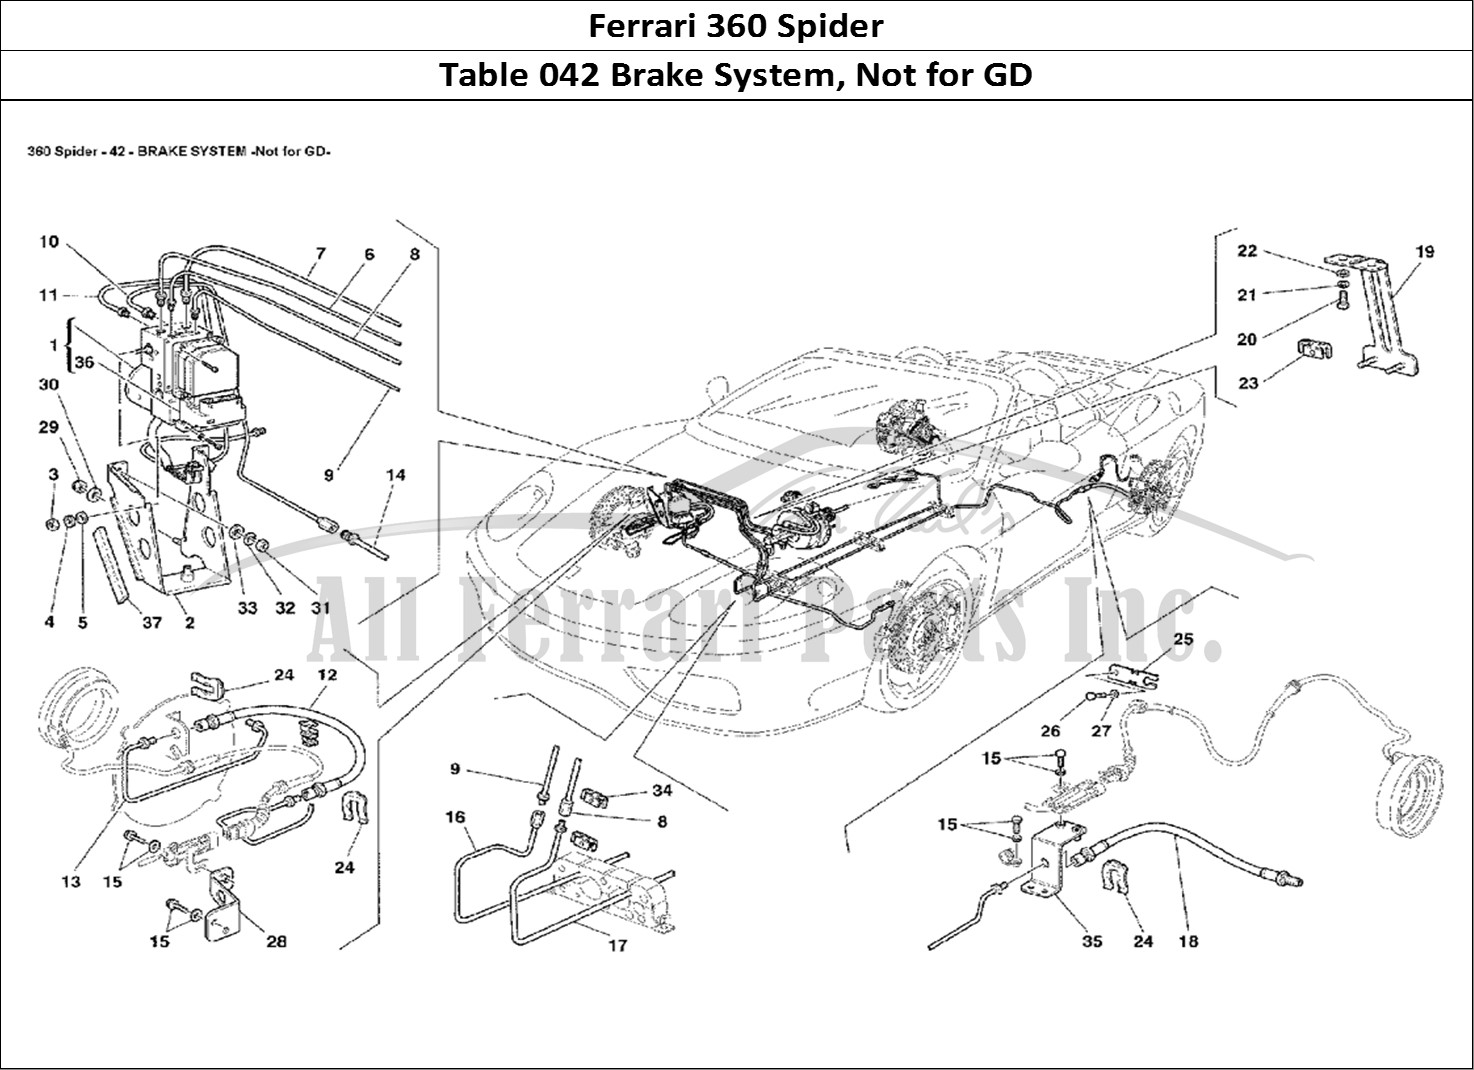 Ferrari Parts Ferrari 360 Spider Page 042 Brake System - Not for GD